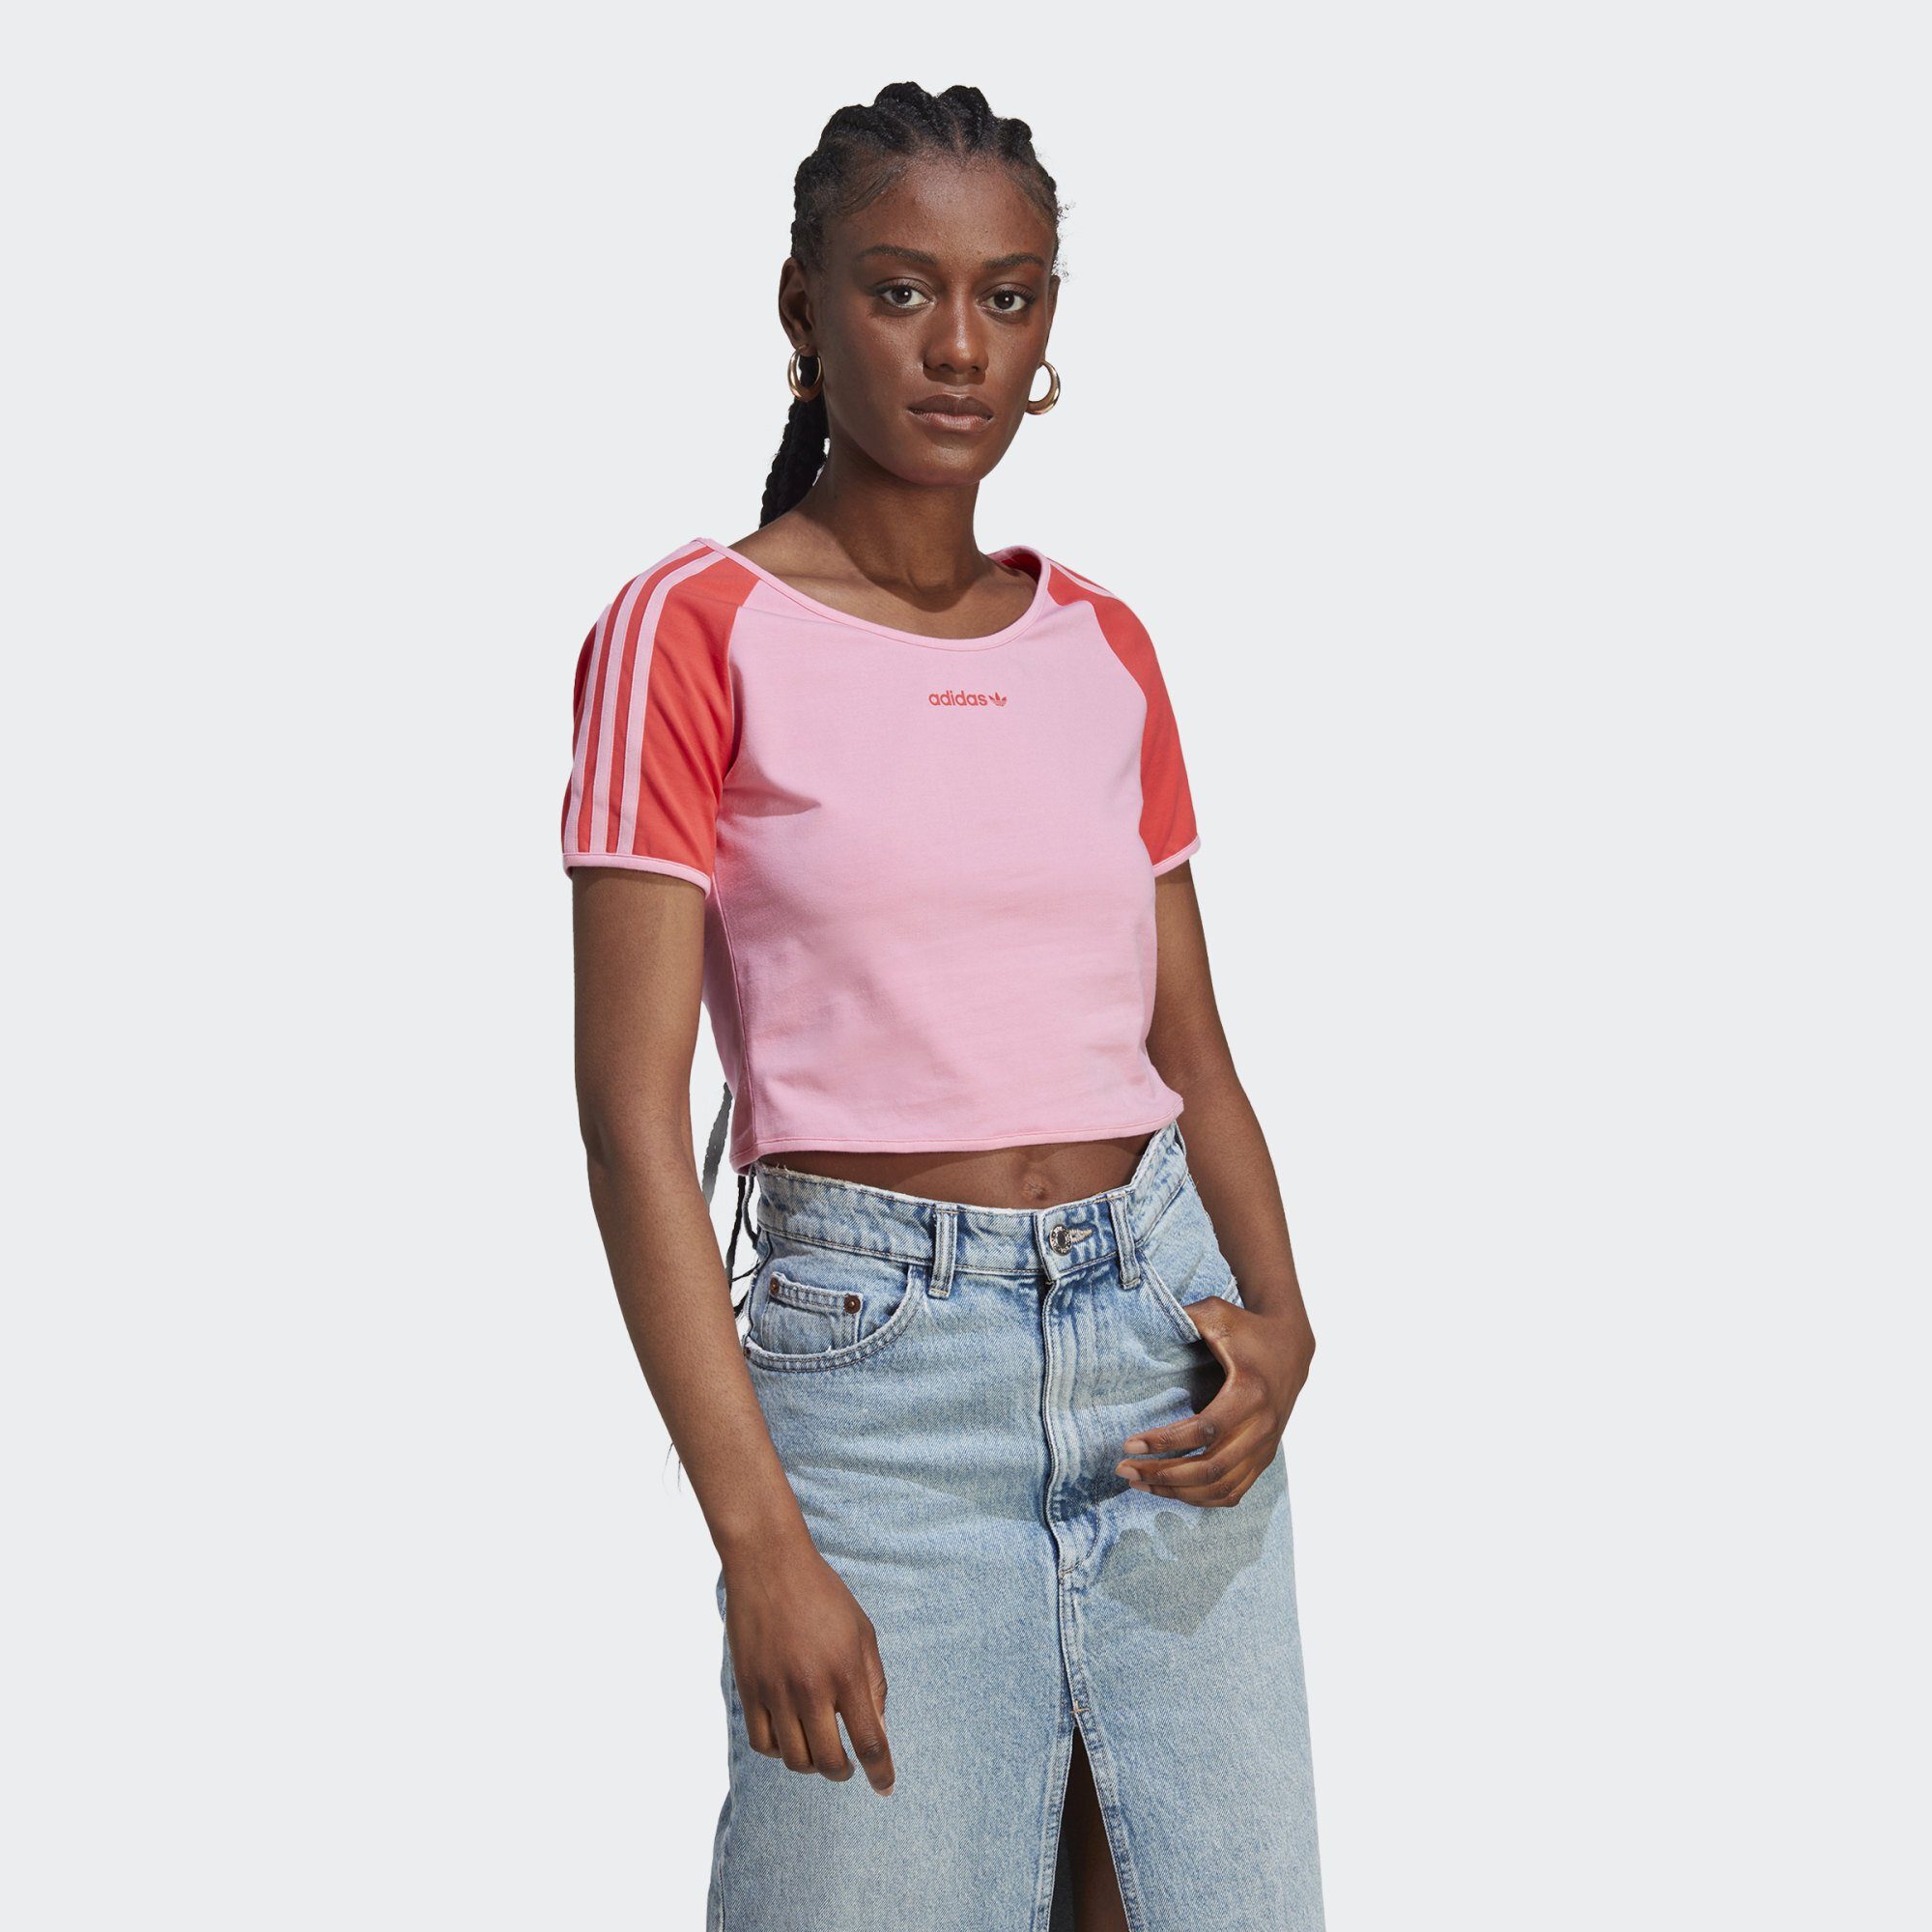 adidas Glow CLUB ISLAND Semi T-SHIRT Originals Pink SHORT / Coral T-Shirt Real